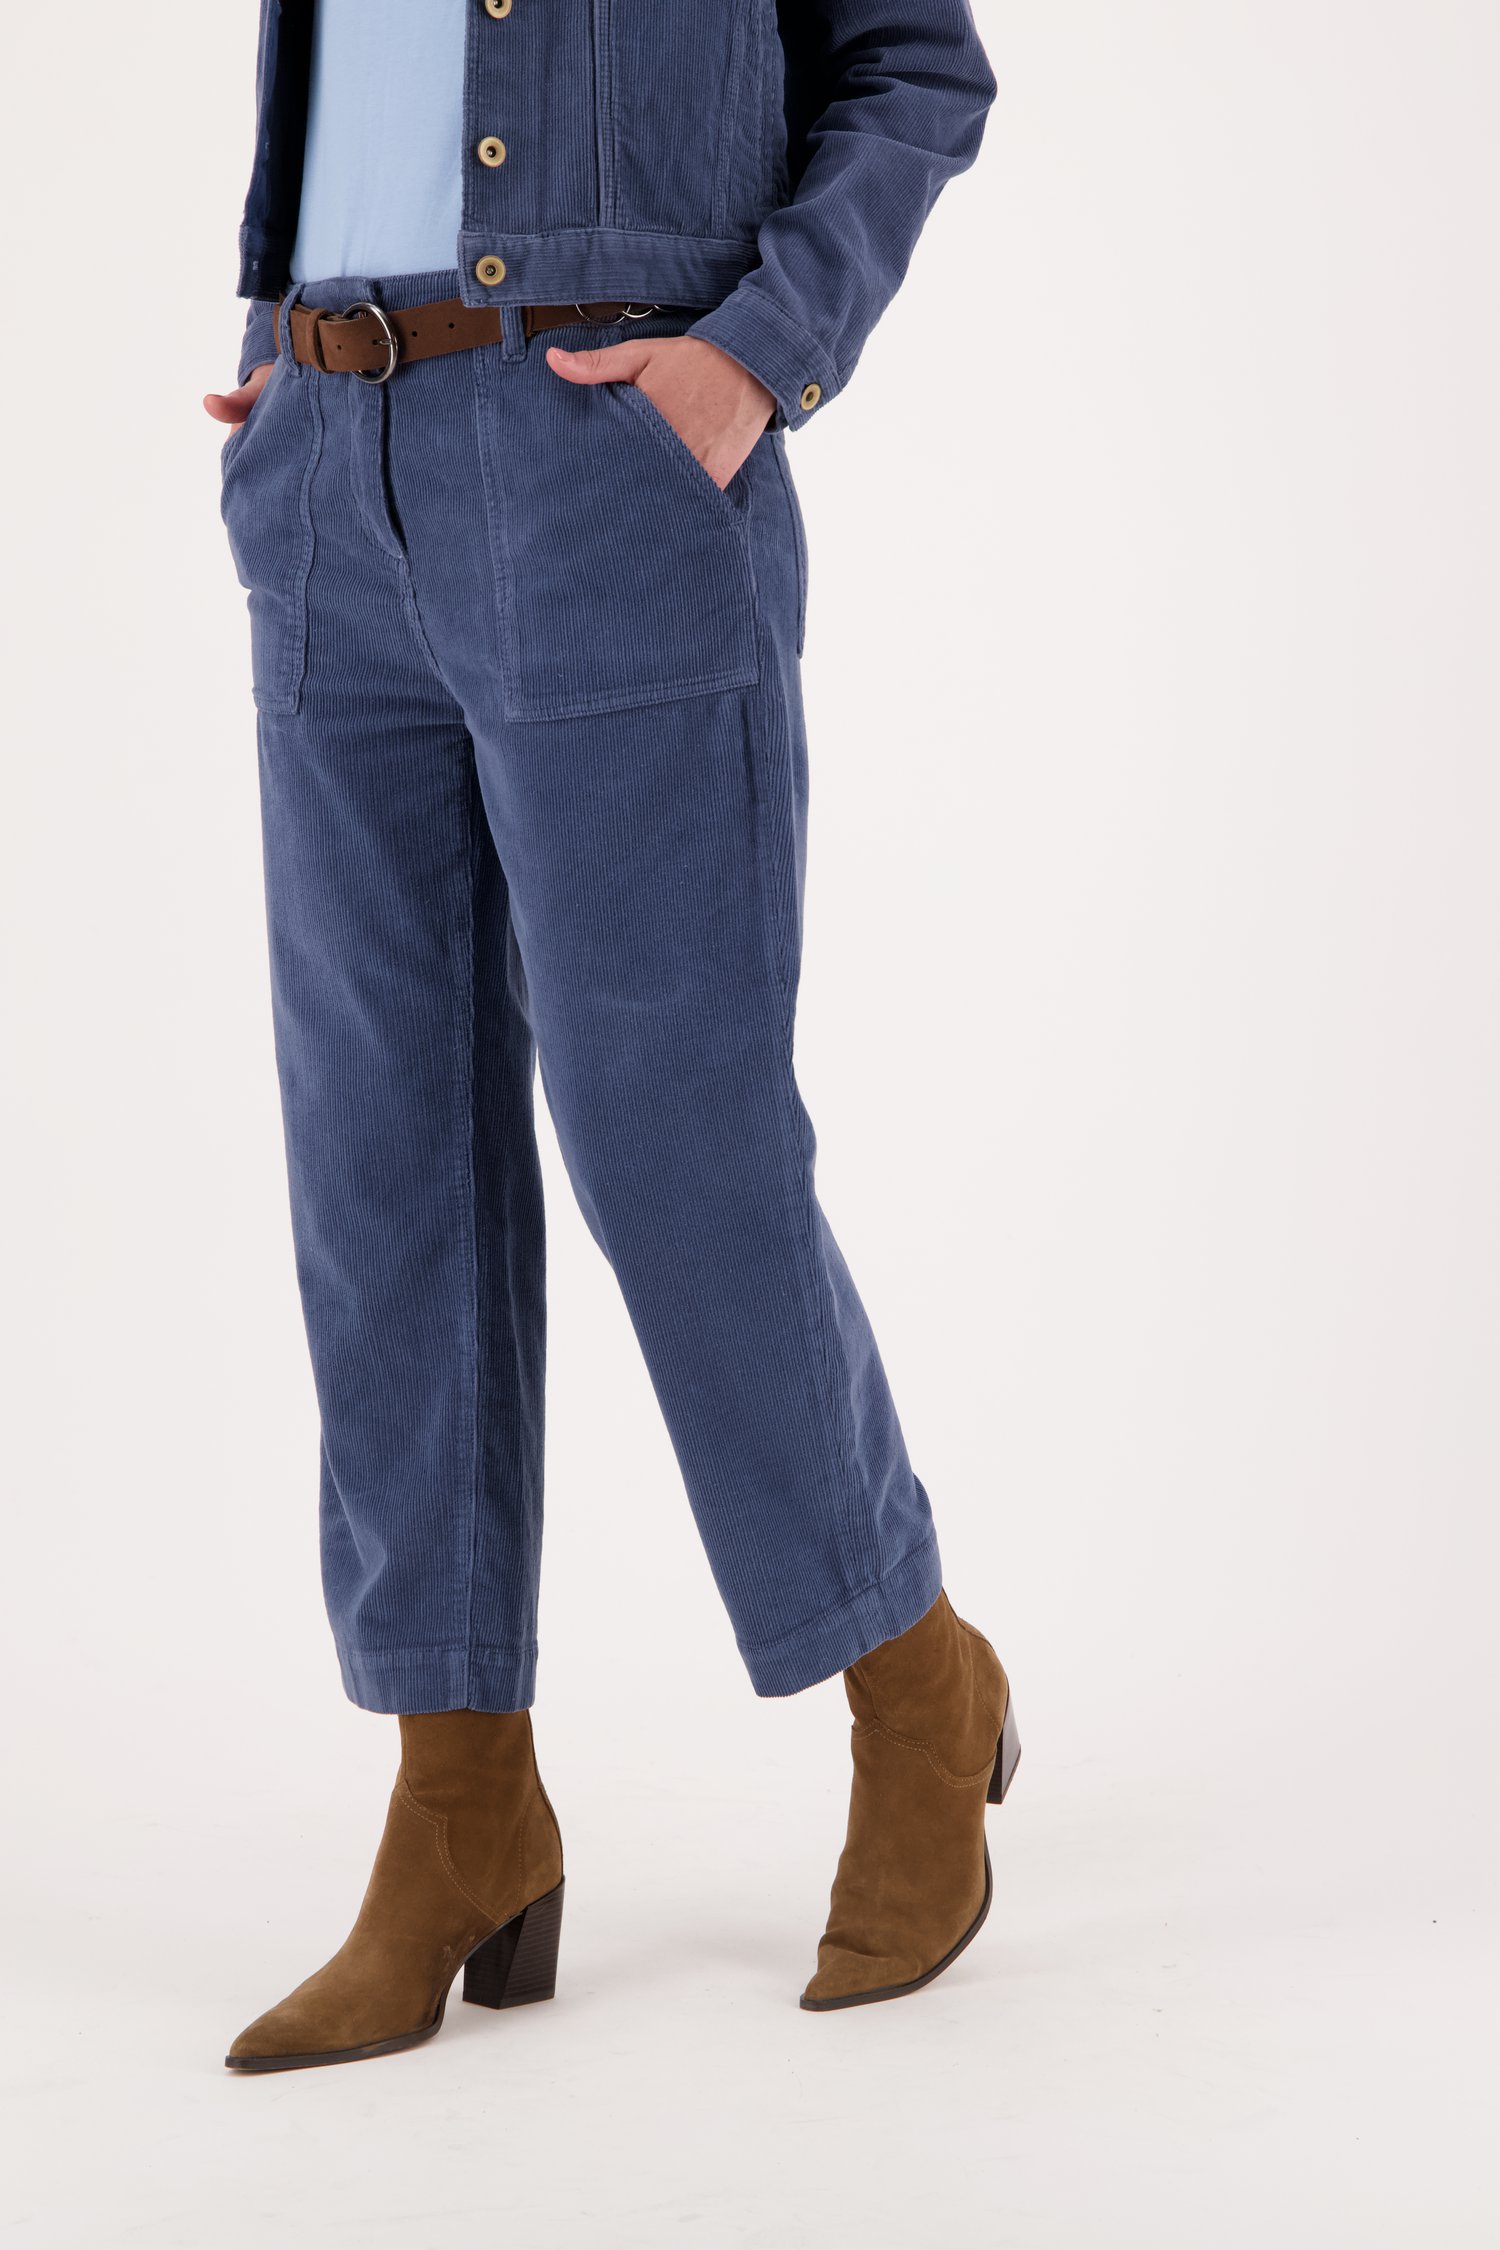 Blauwe corduroy broek - straight fit van Libelle voor Dames